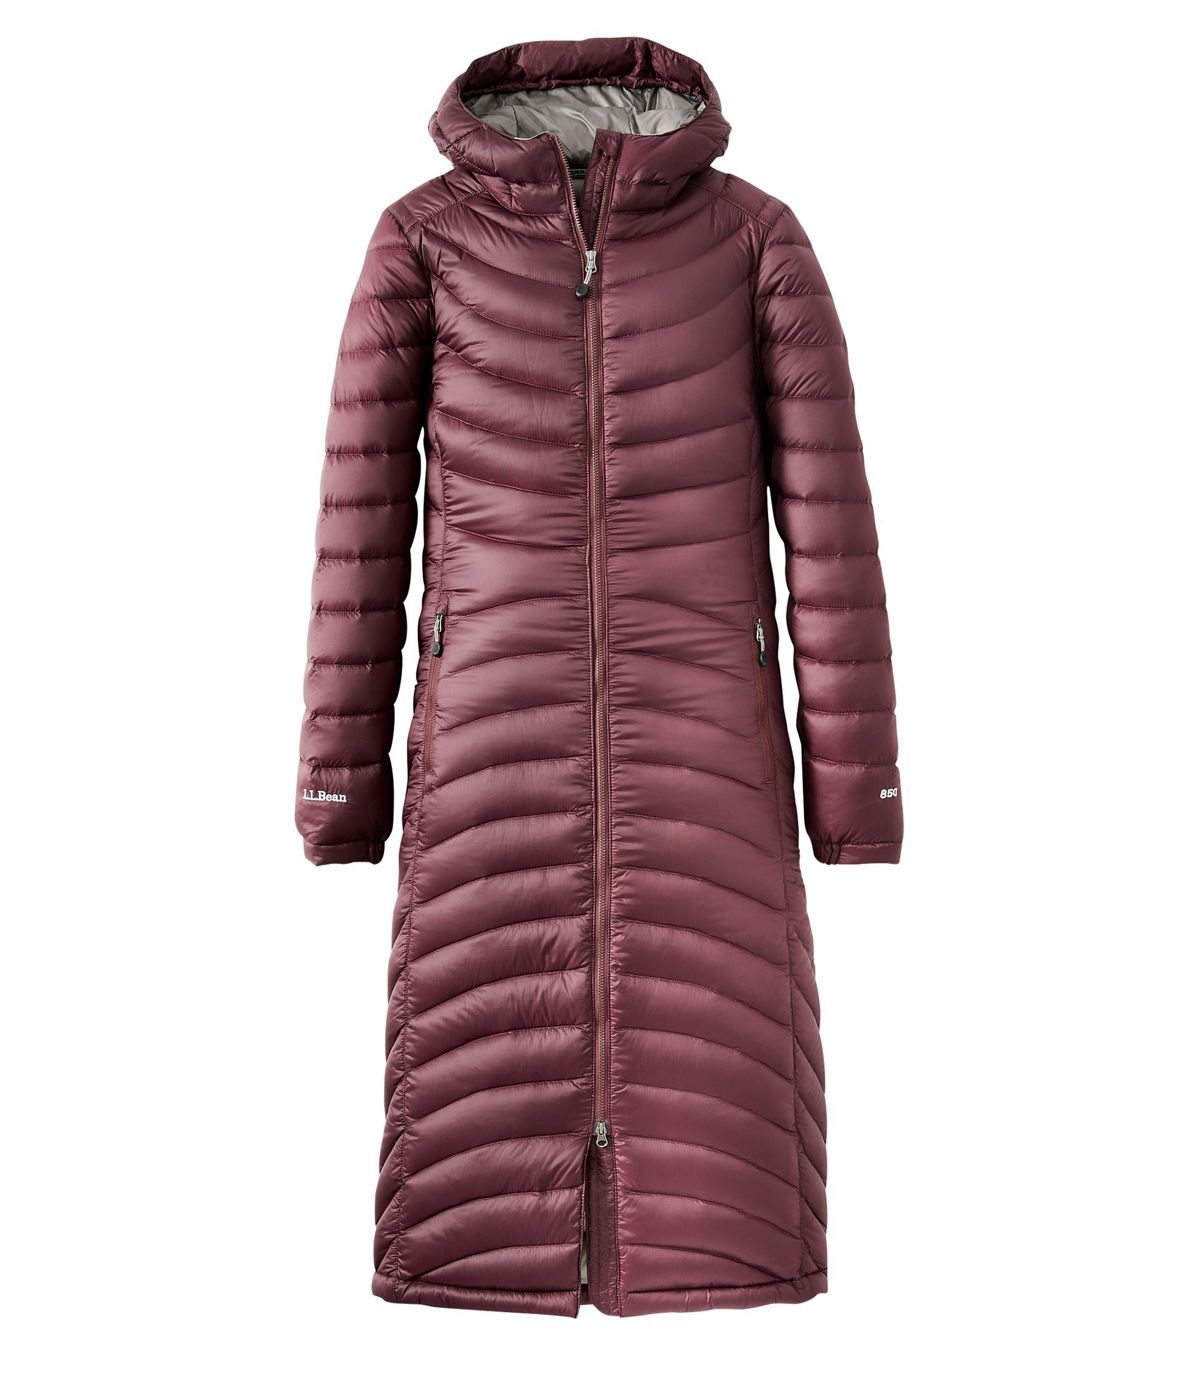 WSPLYSPJY Womens Winter Puffer Down Jackets Long Sleeve Zipper Warm Coats